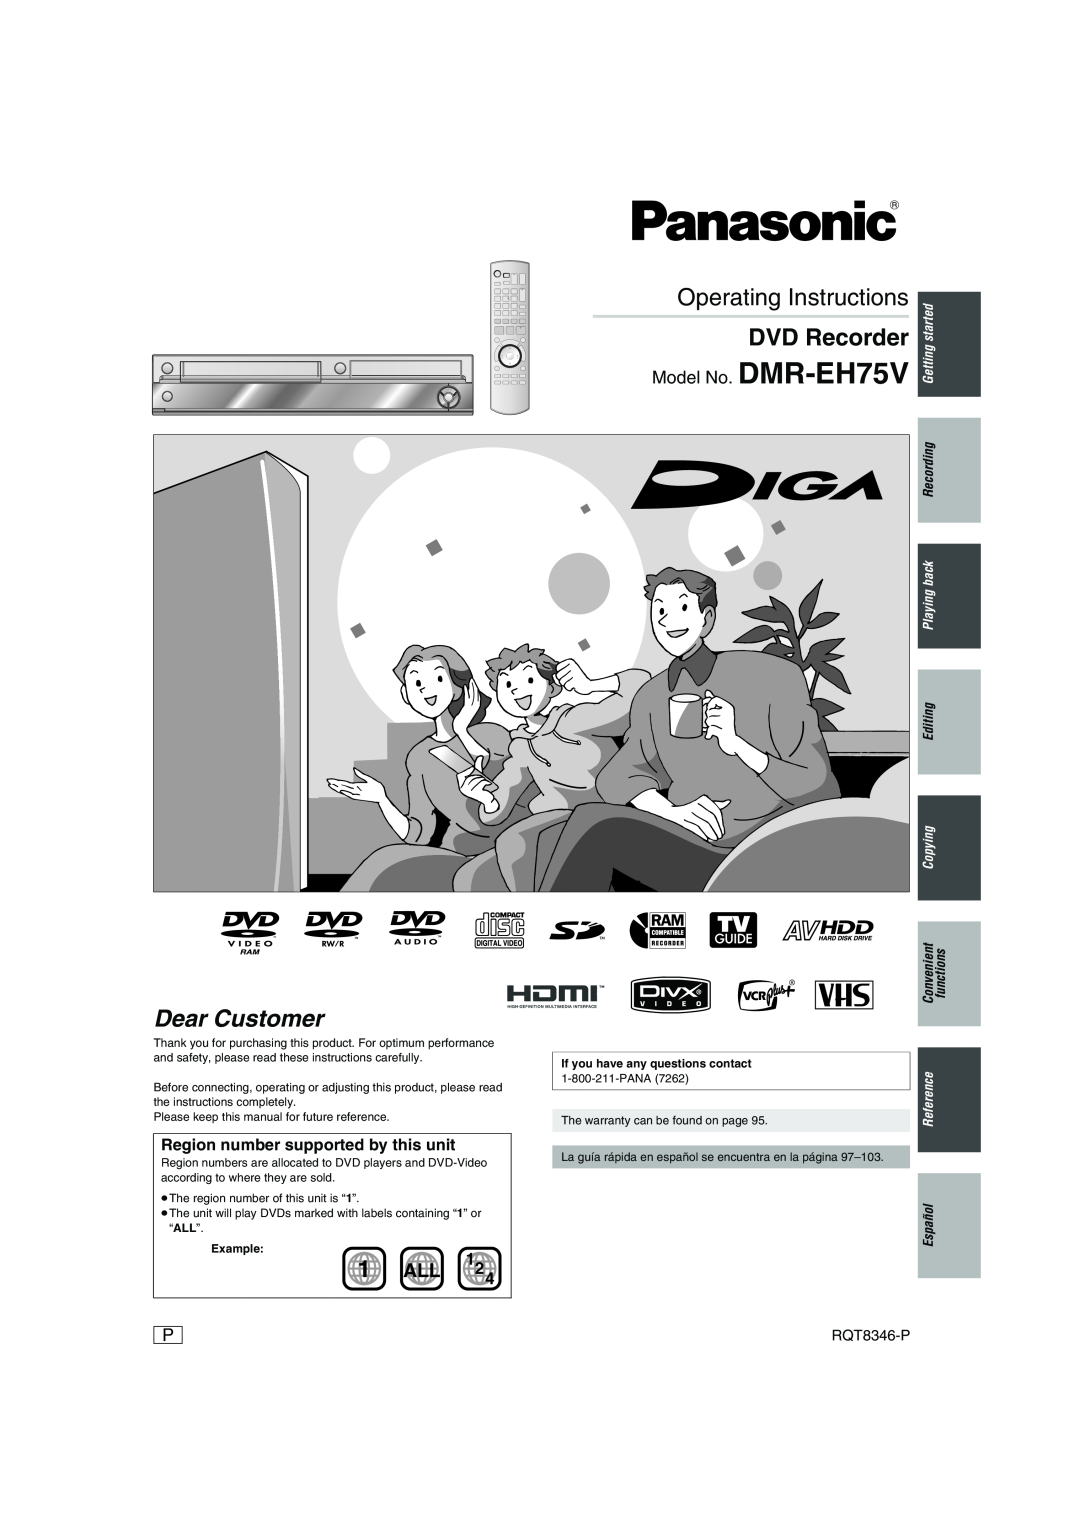 Panasonic warranty Operating Instructions, Dear Customer, DVD Recorder, 1 ALL, Model No. DMR-EH75V, RQT8346-P, started 